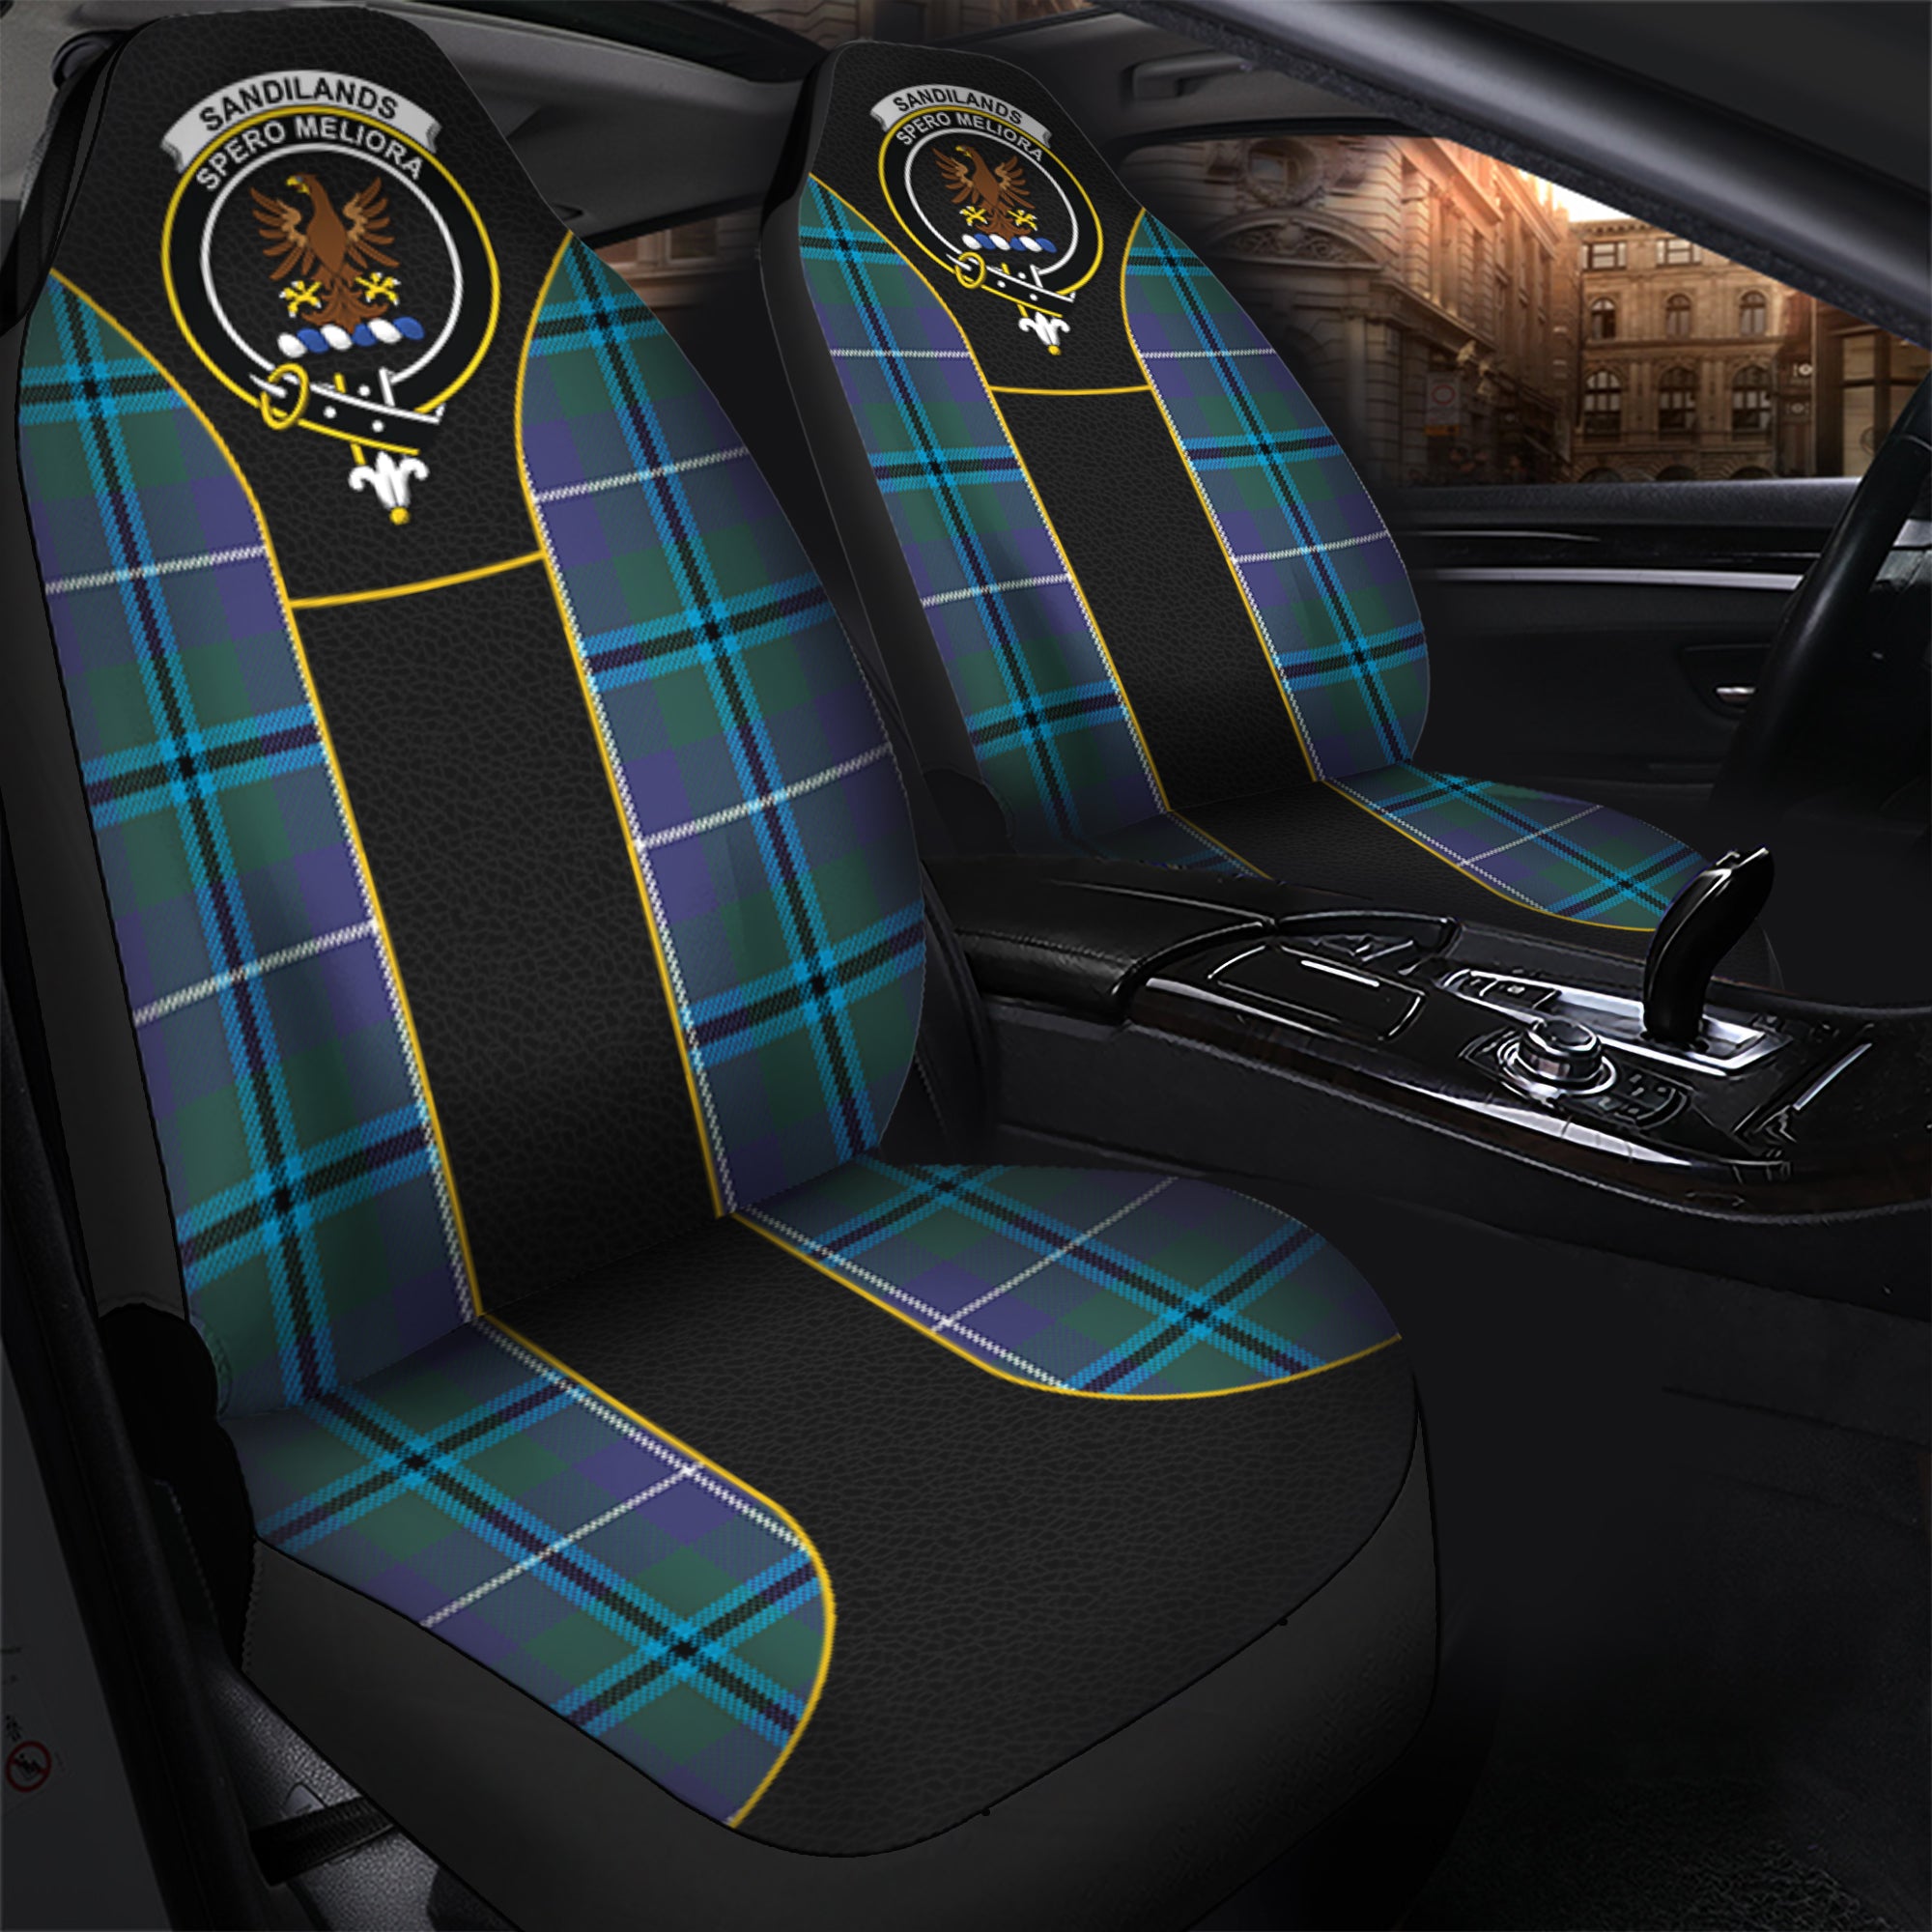 scottish-sandilands-tartan-crest-car-seat-cover-special-style